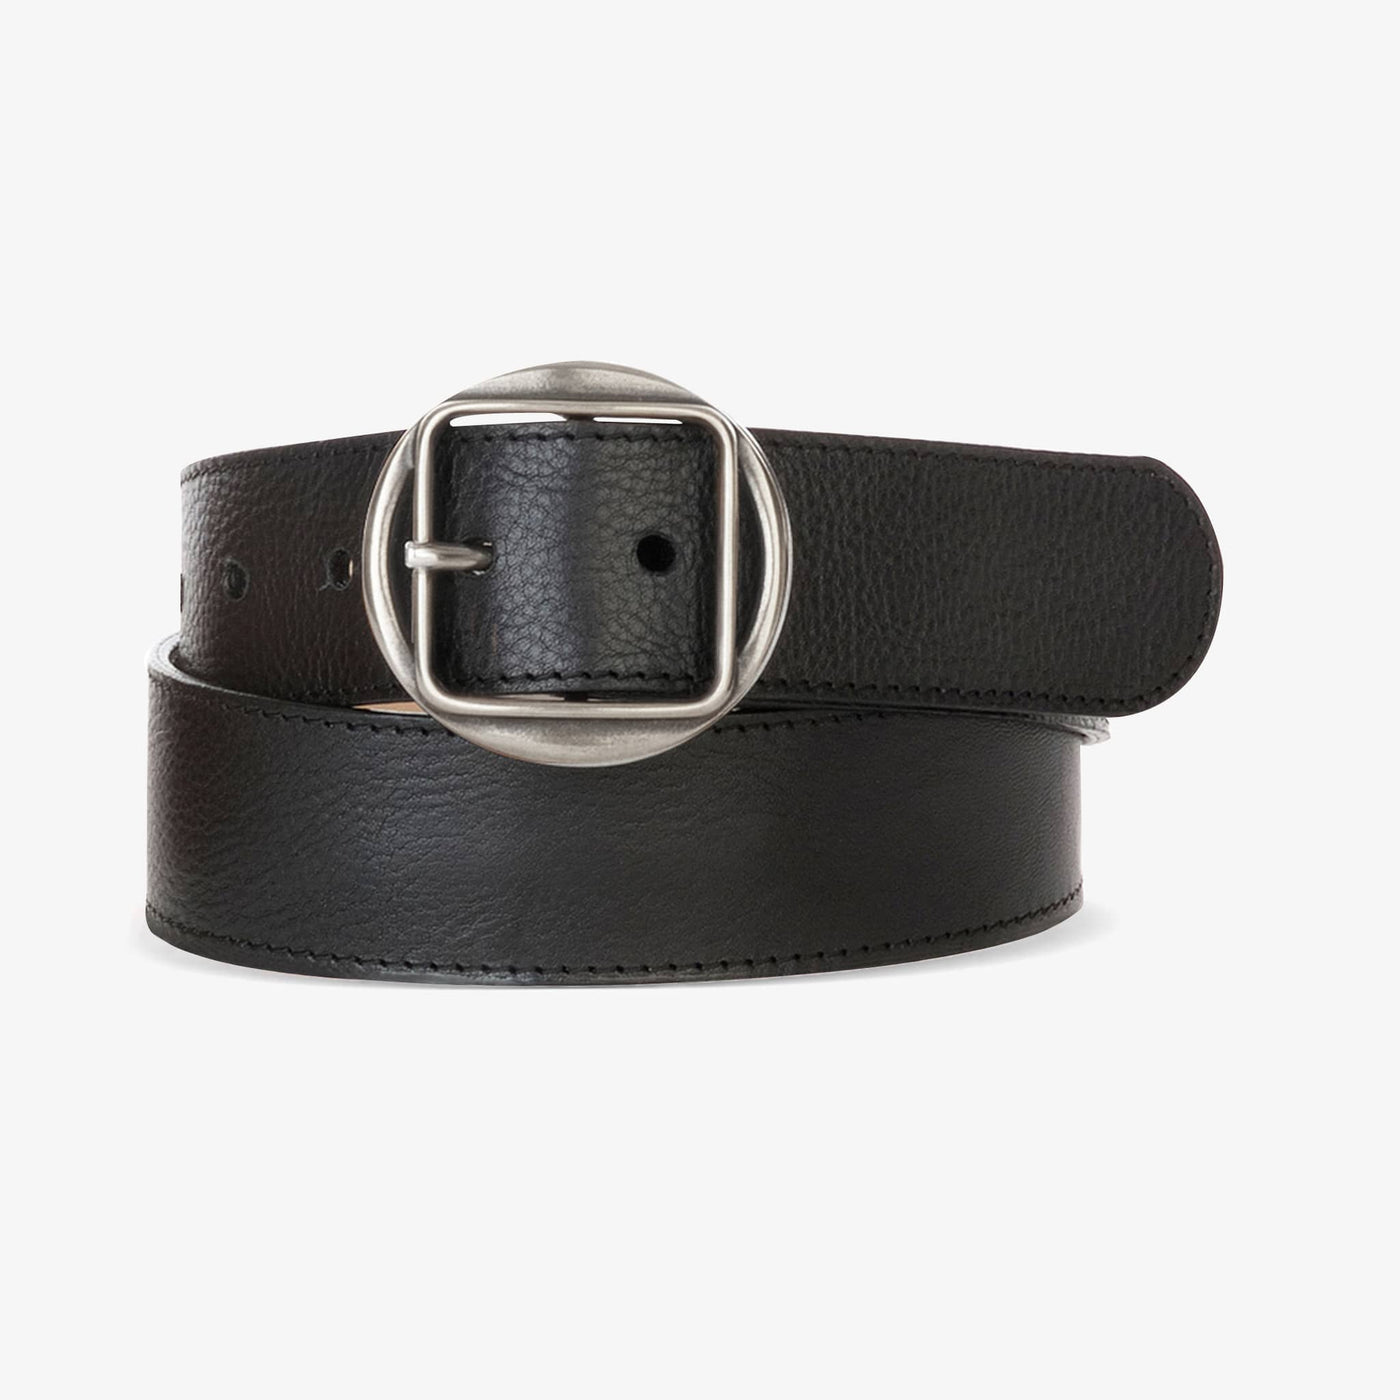 Lev Vachetta BRAVE Leather Belt -- Custom Made for You